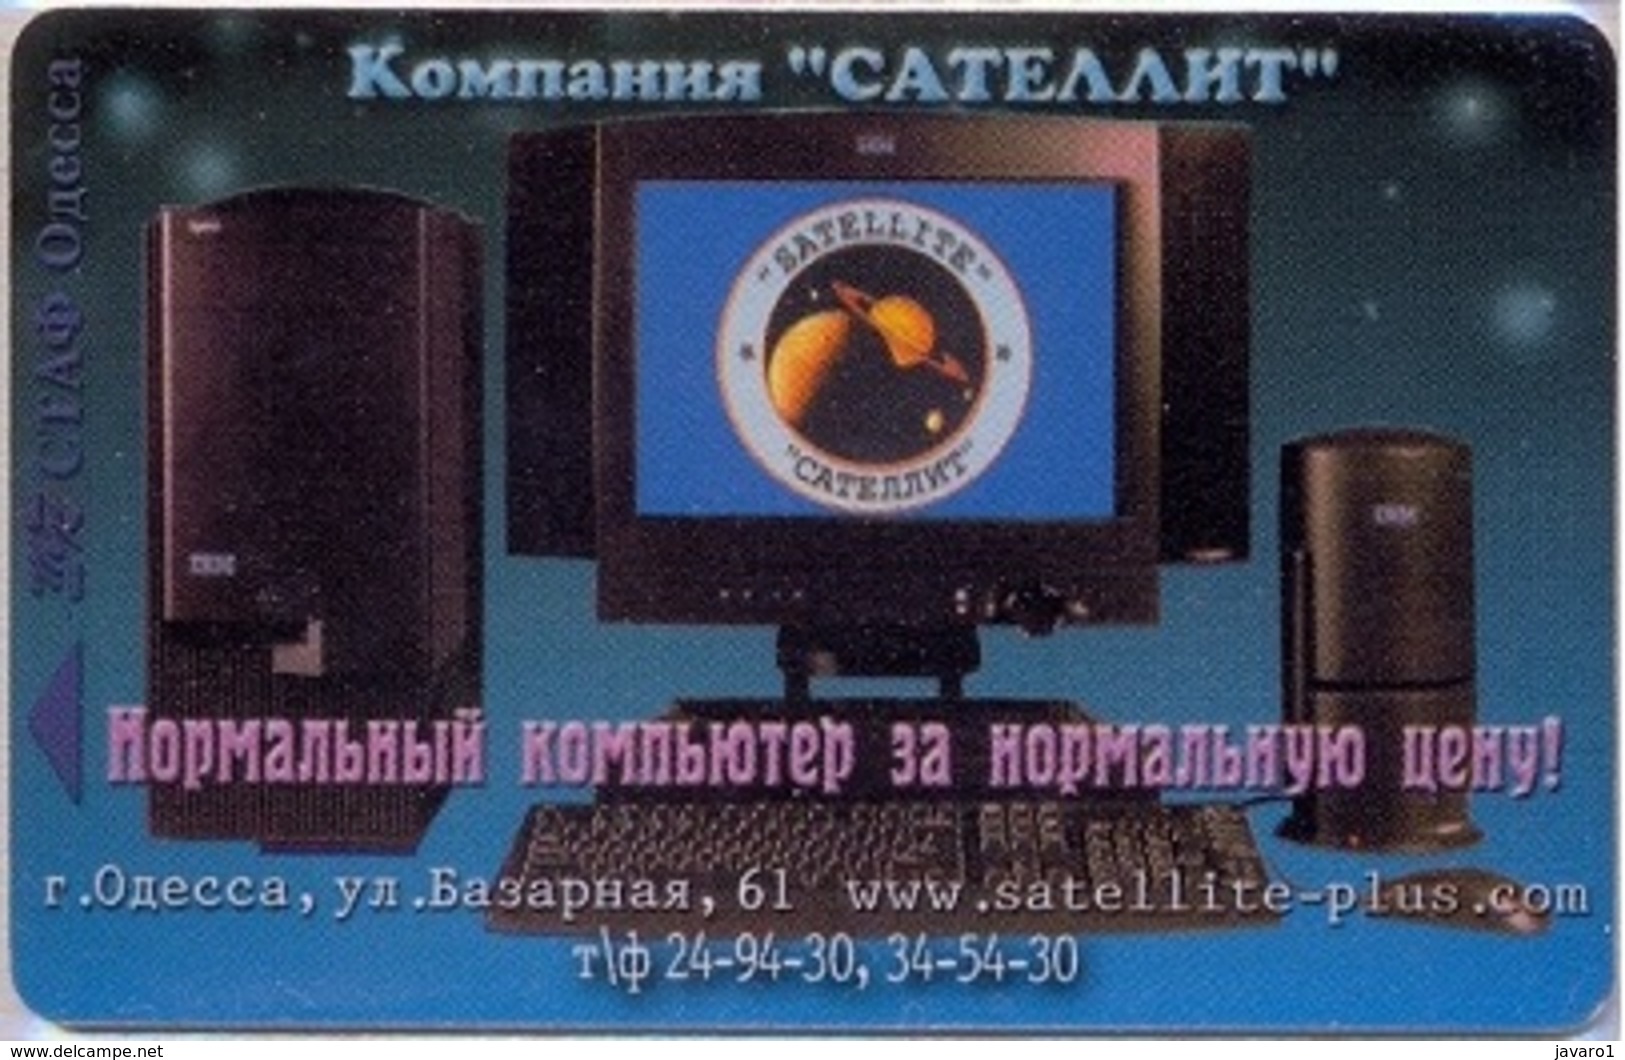 ODESSA : OD79 26T 2100 IBM Satellite TV     O41 USED (Printed:3000) - Ukraine